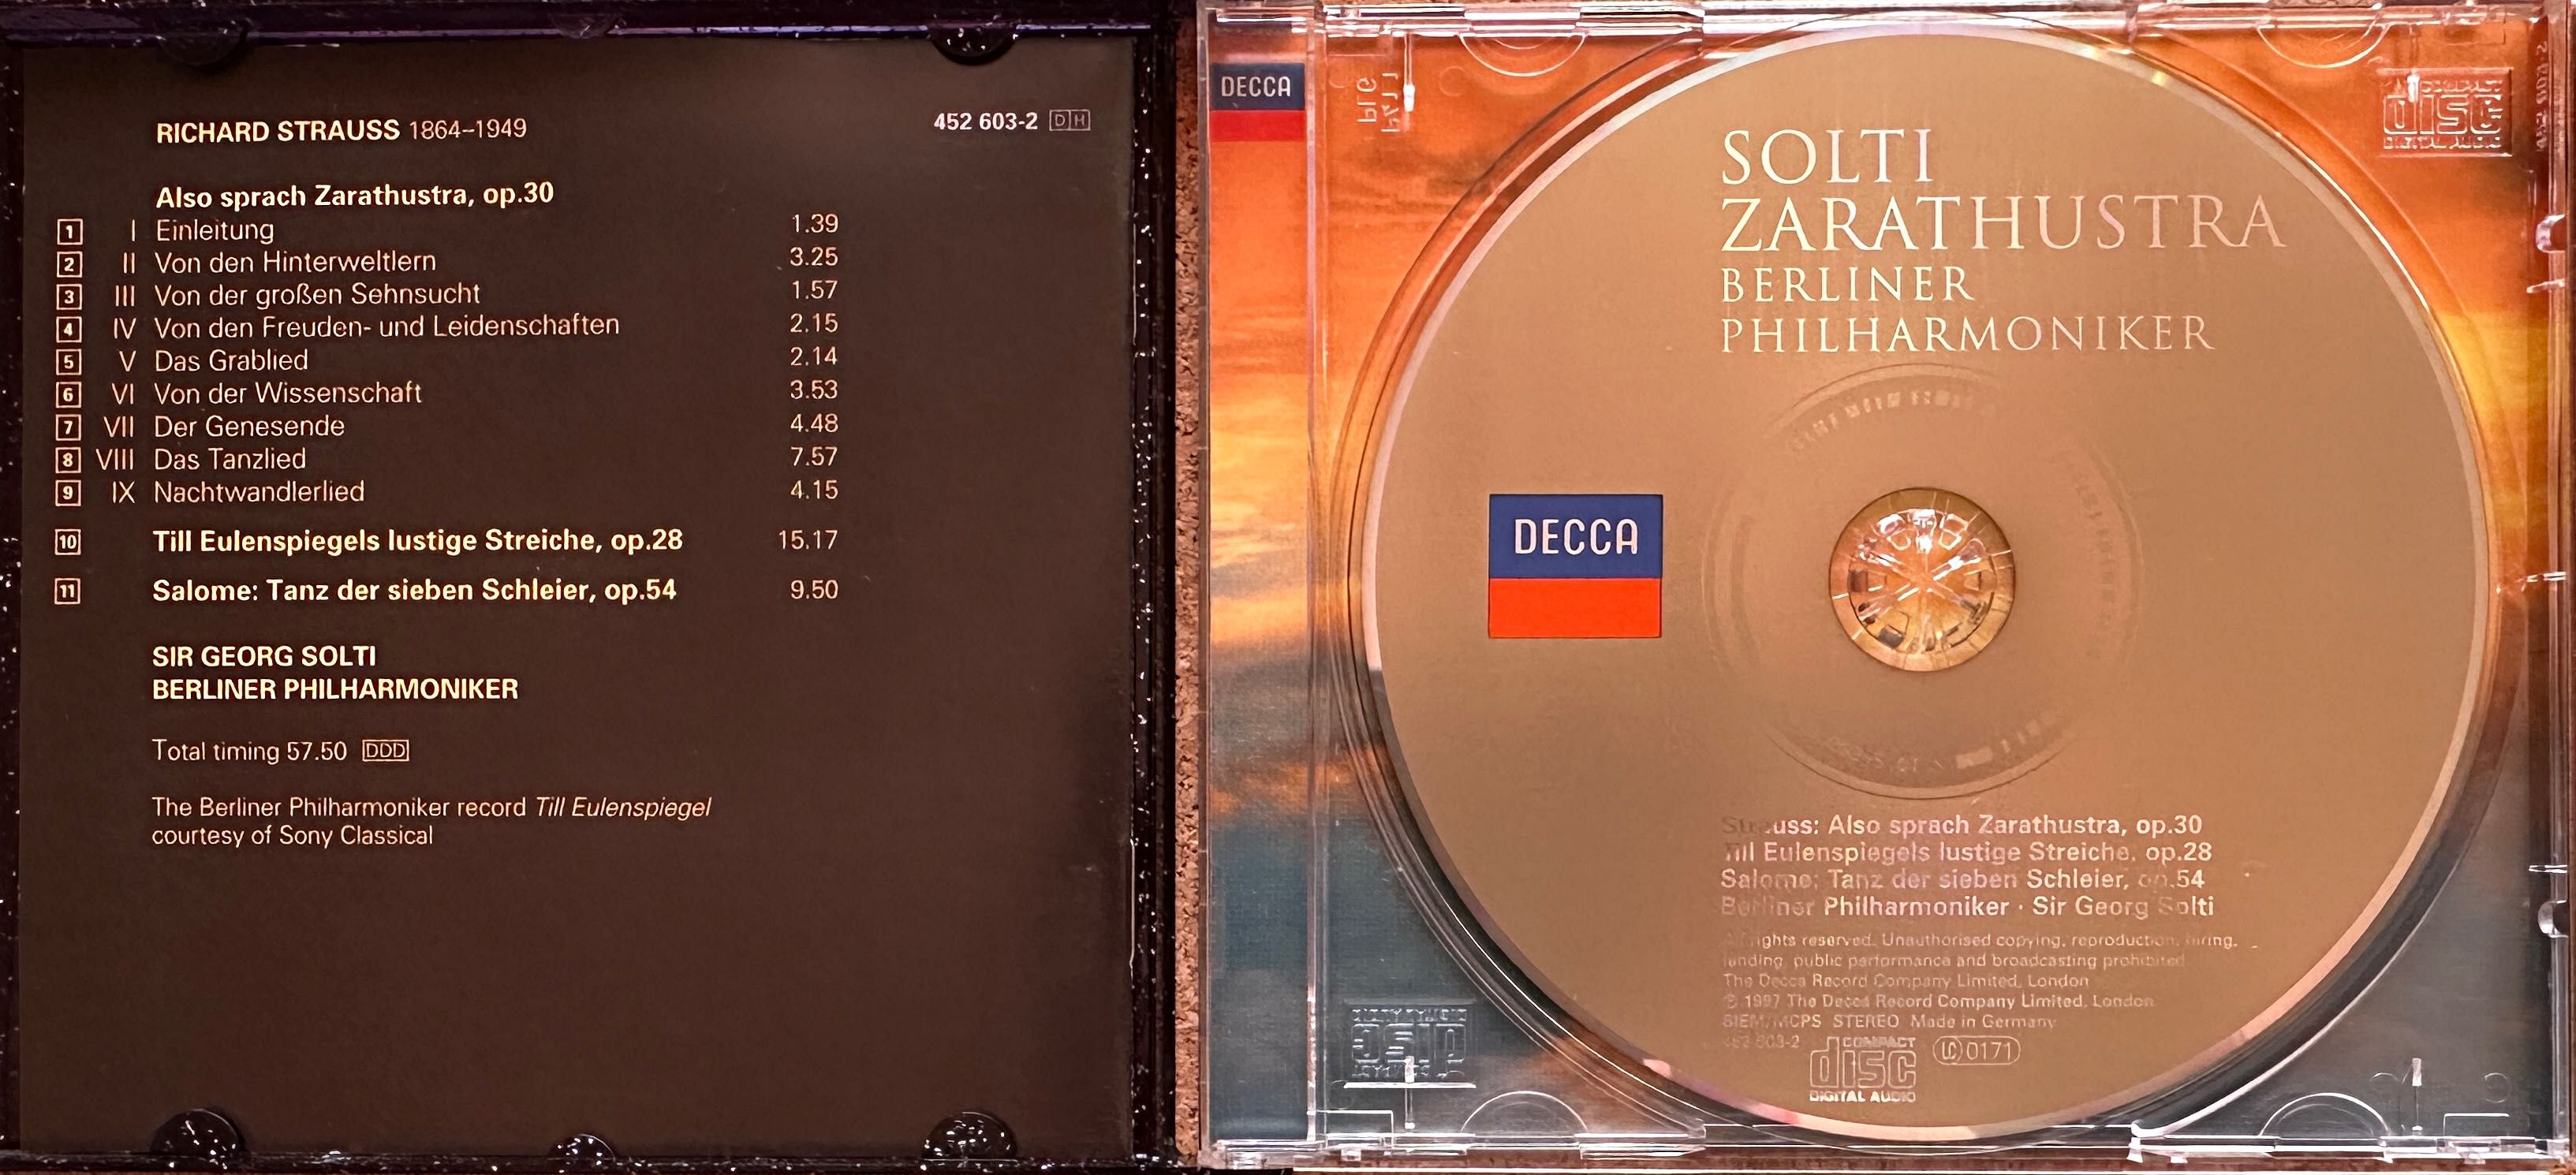 Solti Zarathustra, Richard Strauss, Berliner Philharmoniker, CD, DECCA